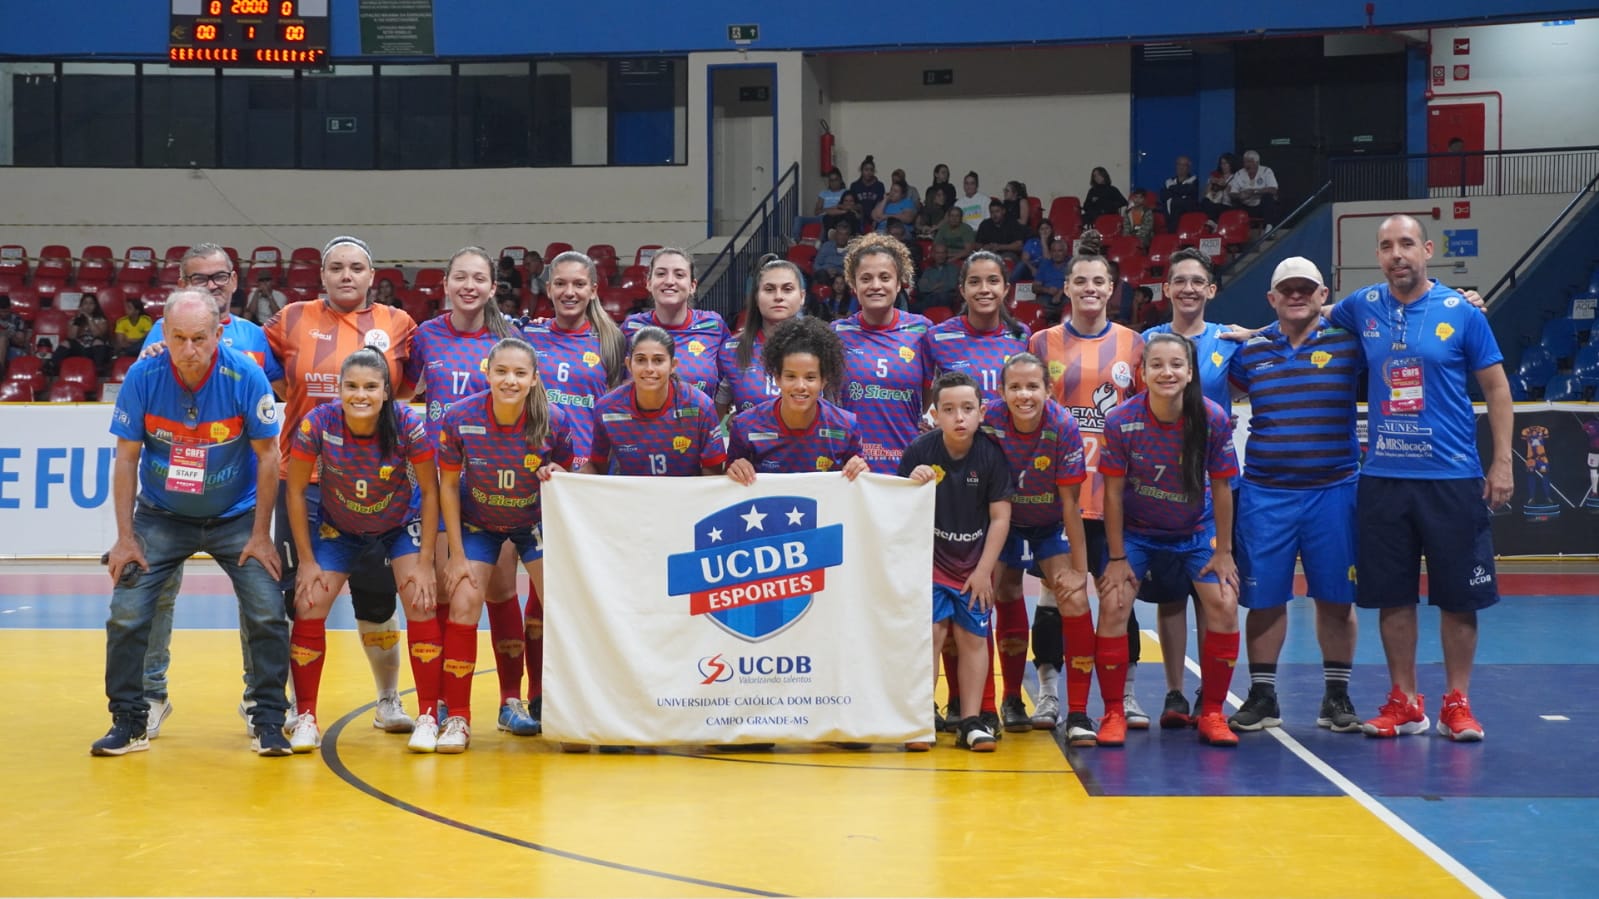 SERC/UCDB (BRA) X FACULDADE SOGIPA (BRA) - Copa Mundo do Futsal